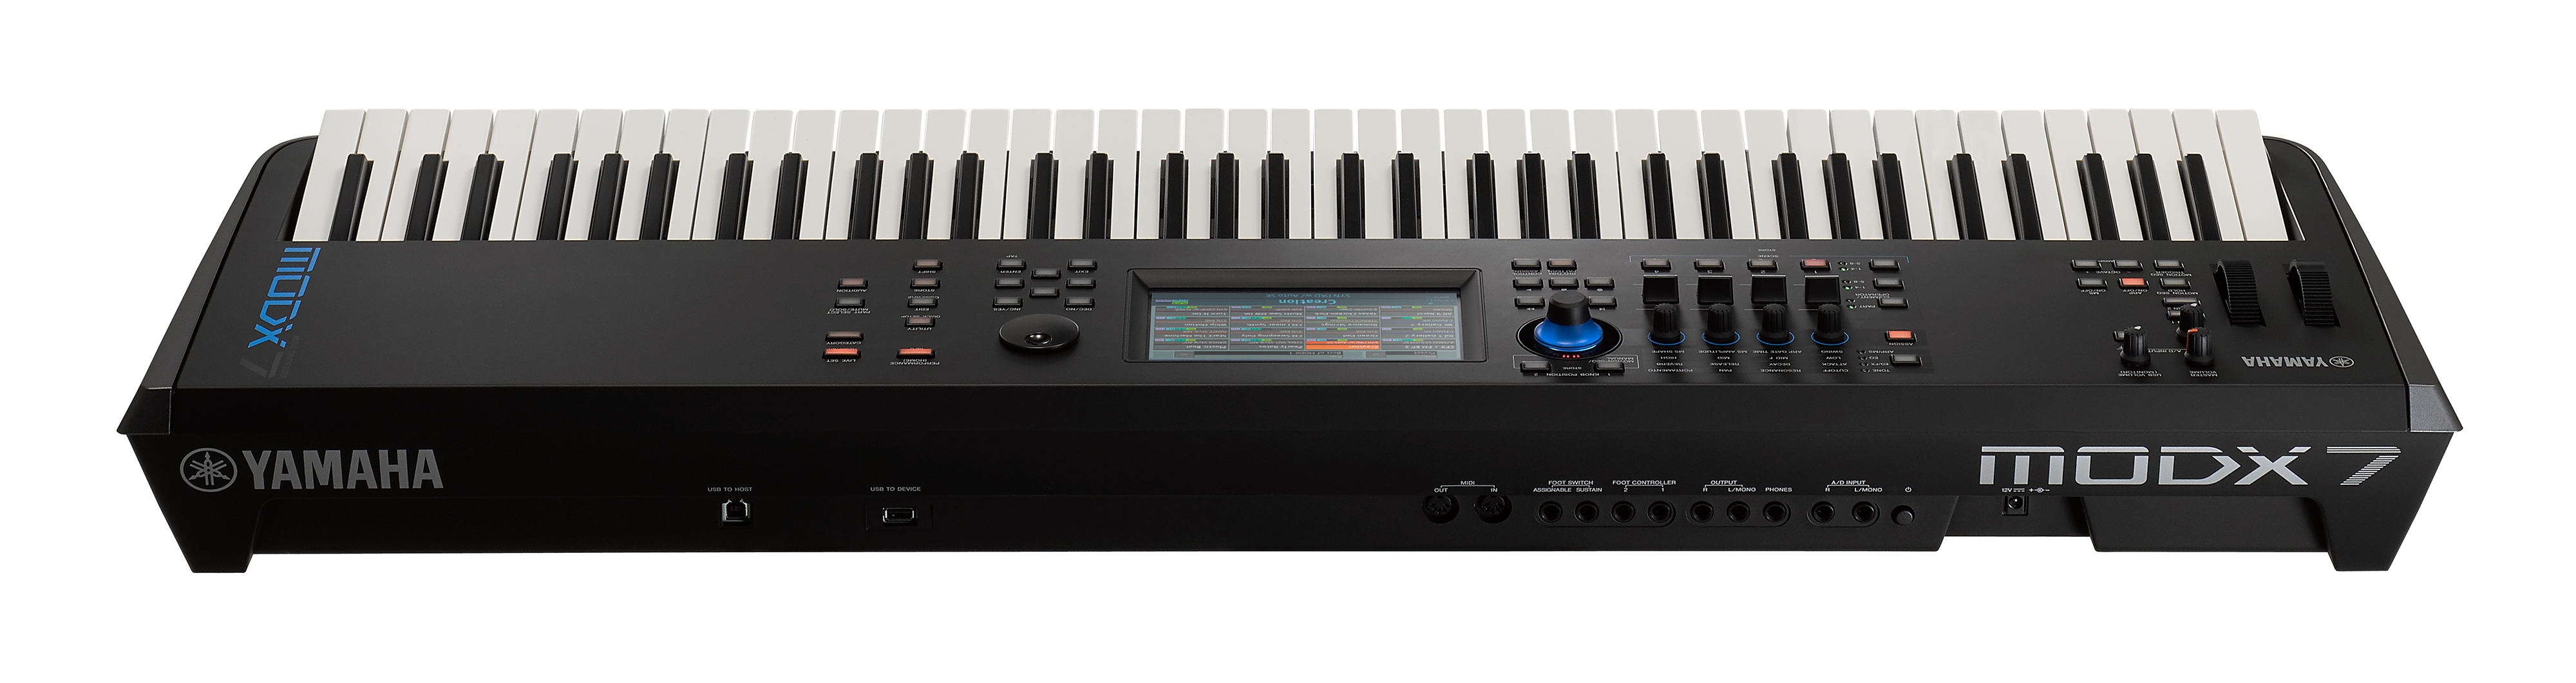 Đàn Keyboard Synthersizer Yamaha MODX Cao Cấp, Chính Hãng | Yamaha